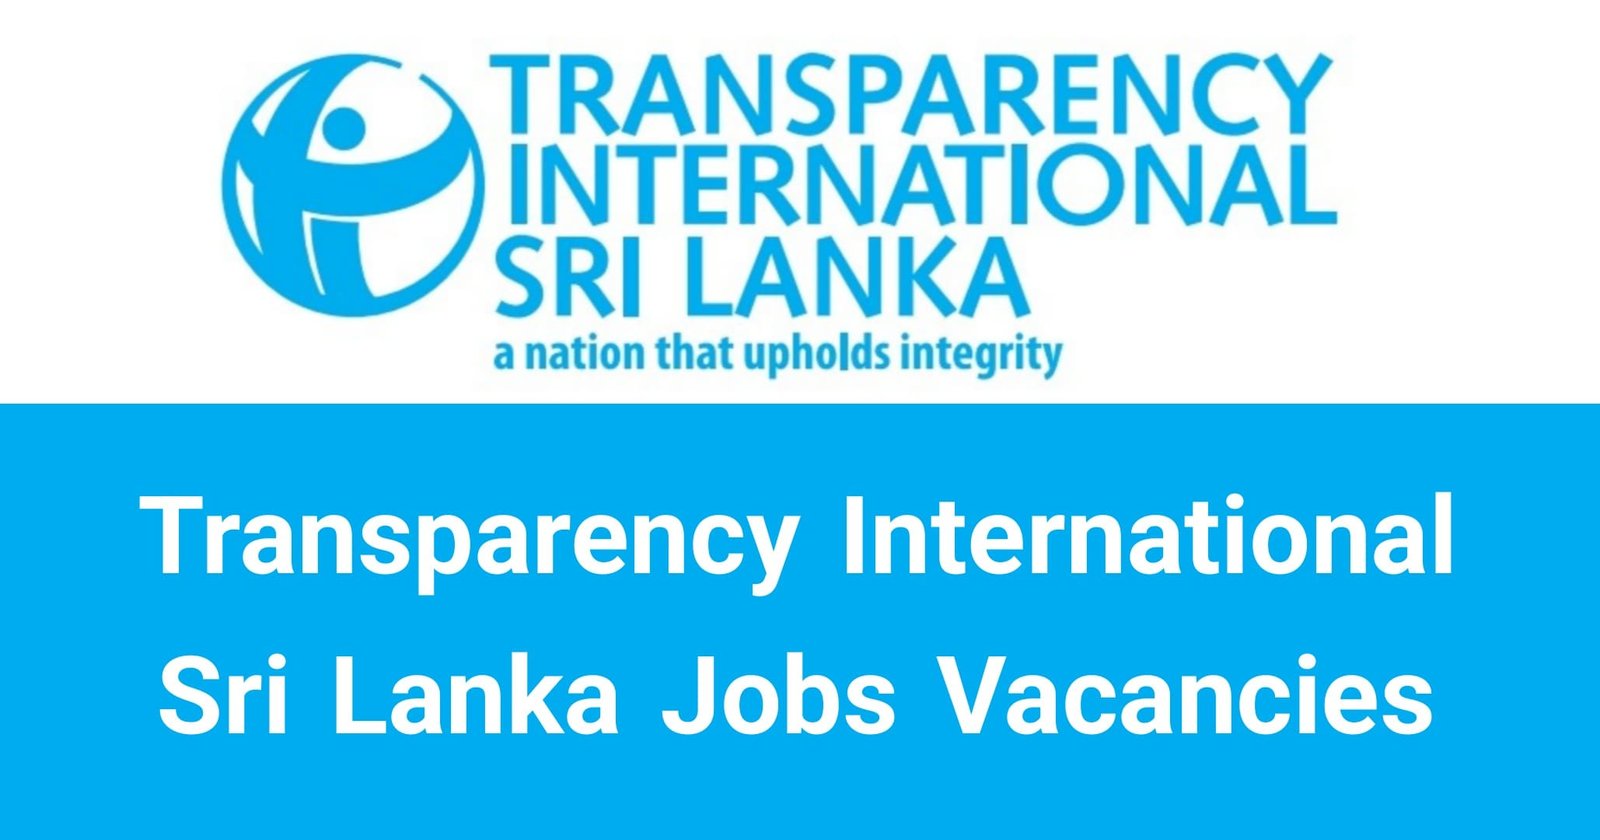 Transparency International Sri Lanka Jobs Vacancies